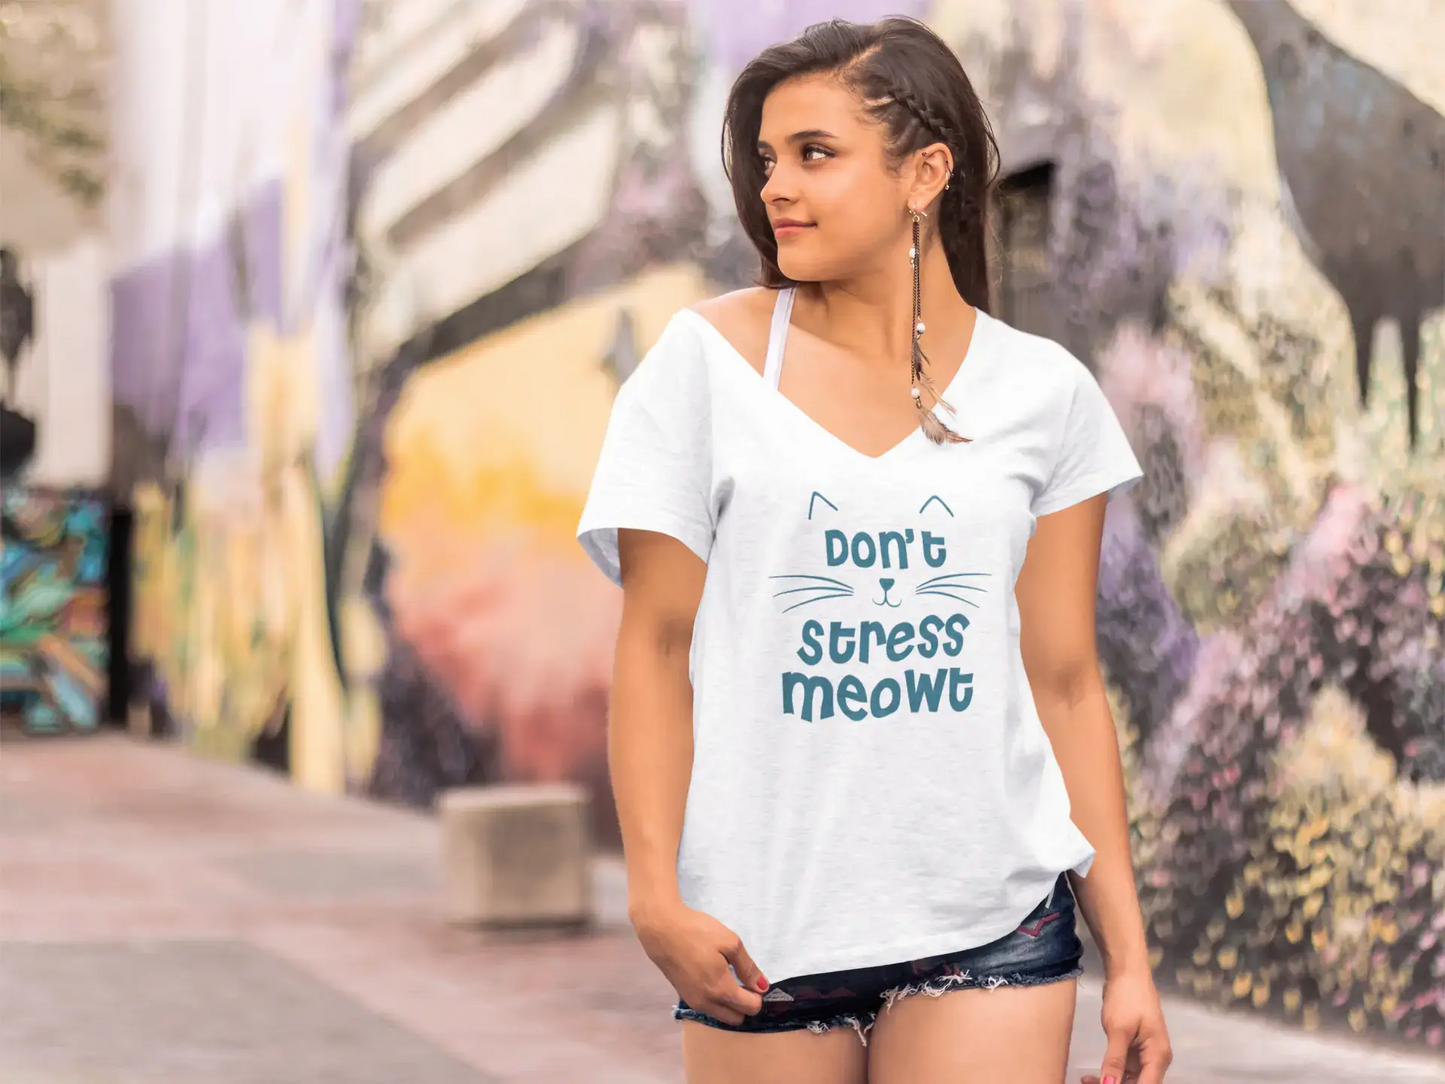 ULTRABASIC Women's T-Shirt Don't Stress Meowt - Funny Kitten Lover Tee Shirt